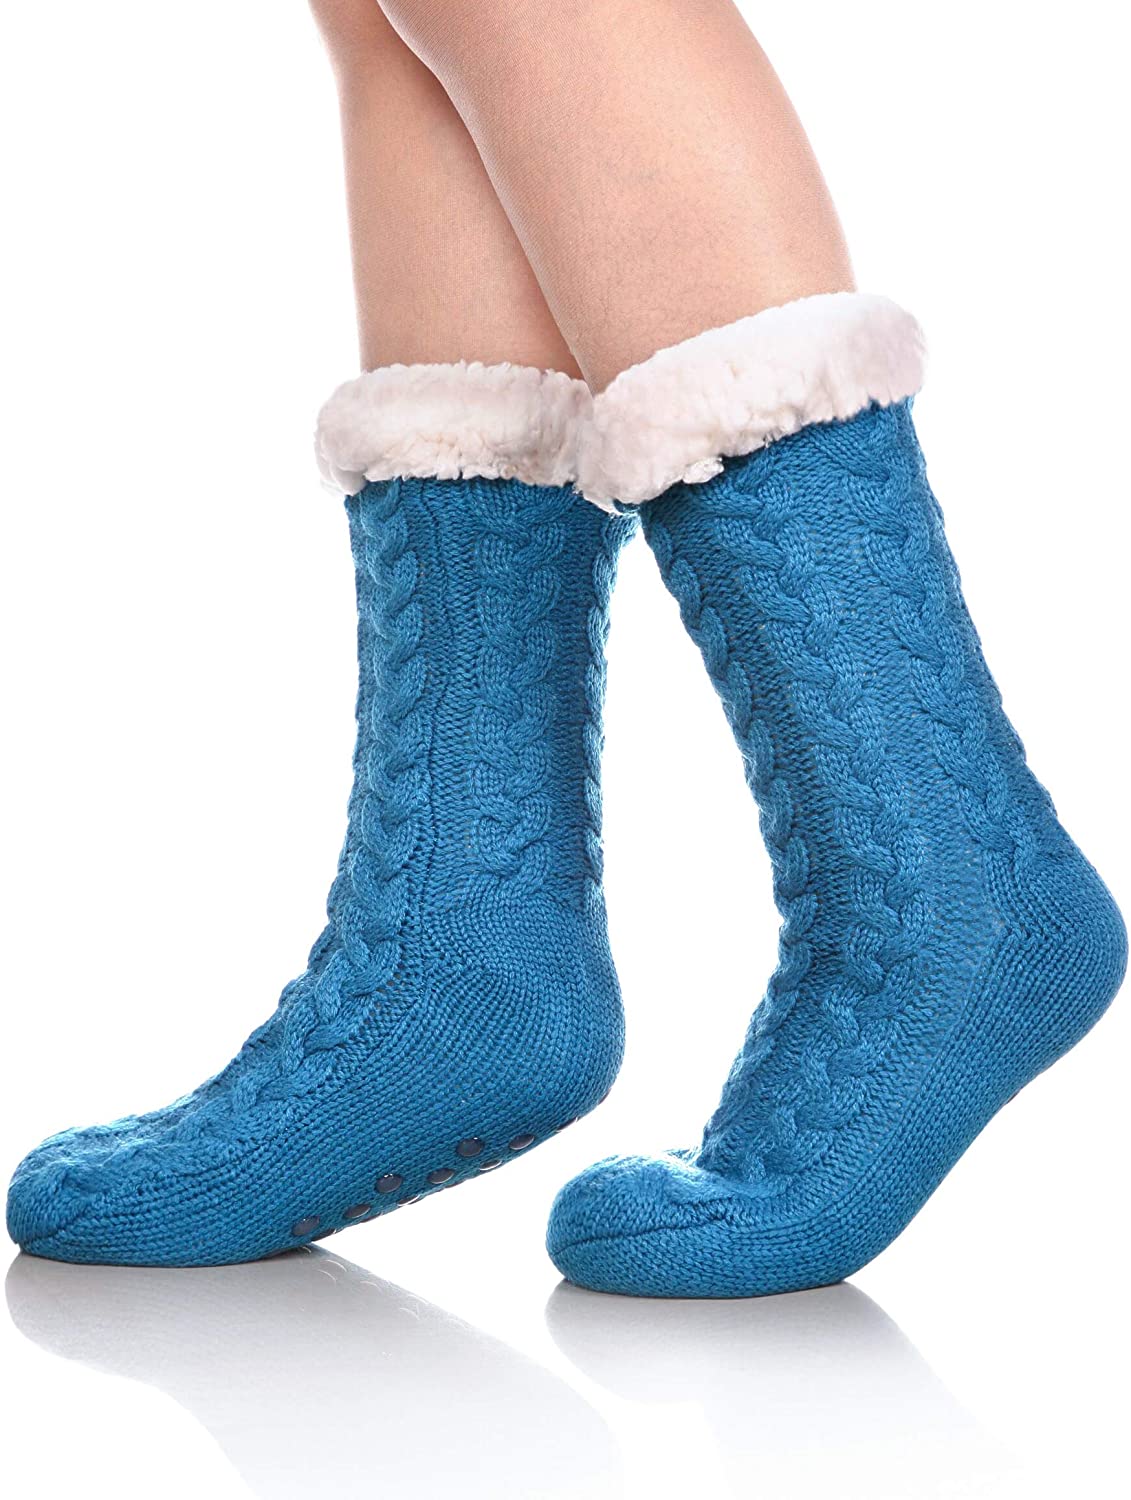 SDBING Womens Sequin Super Soft Warm Cozy Fuzzy Fleece-lined Winter Christmas gift Slipper Socks 